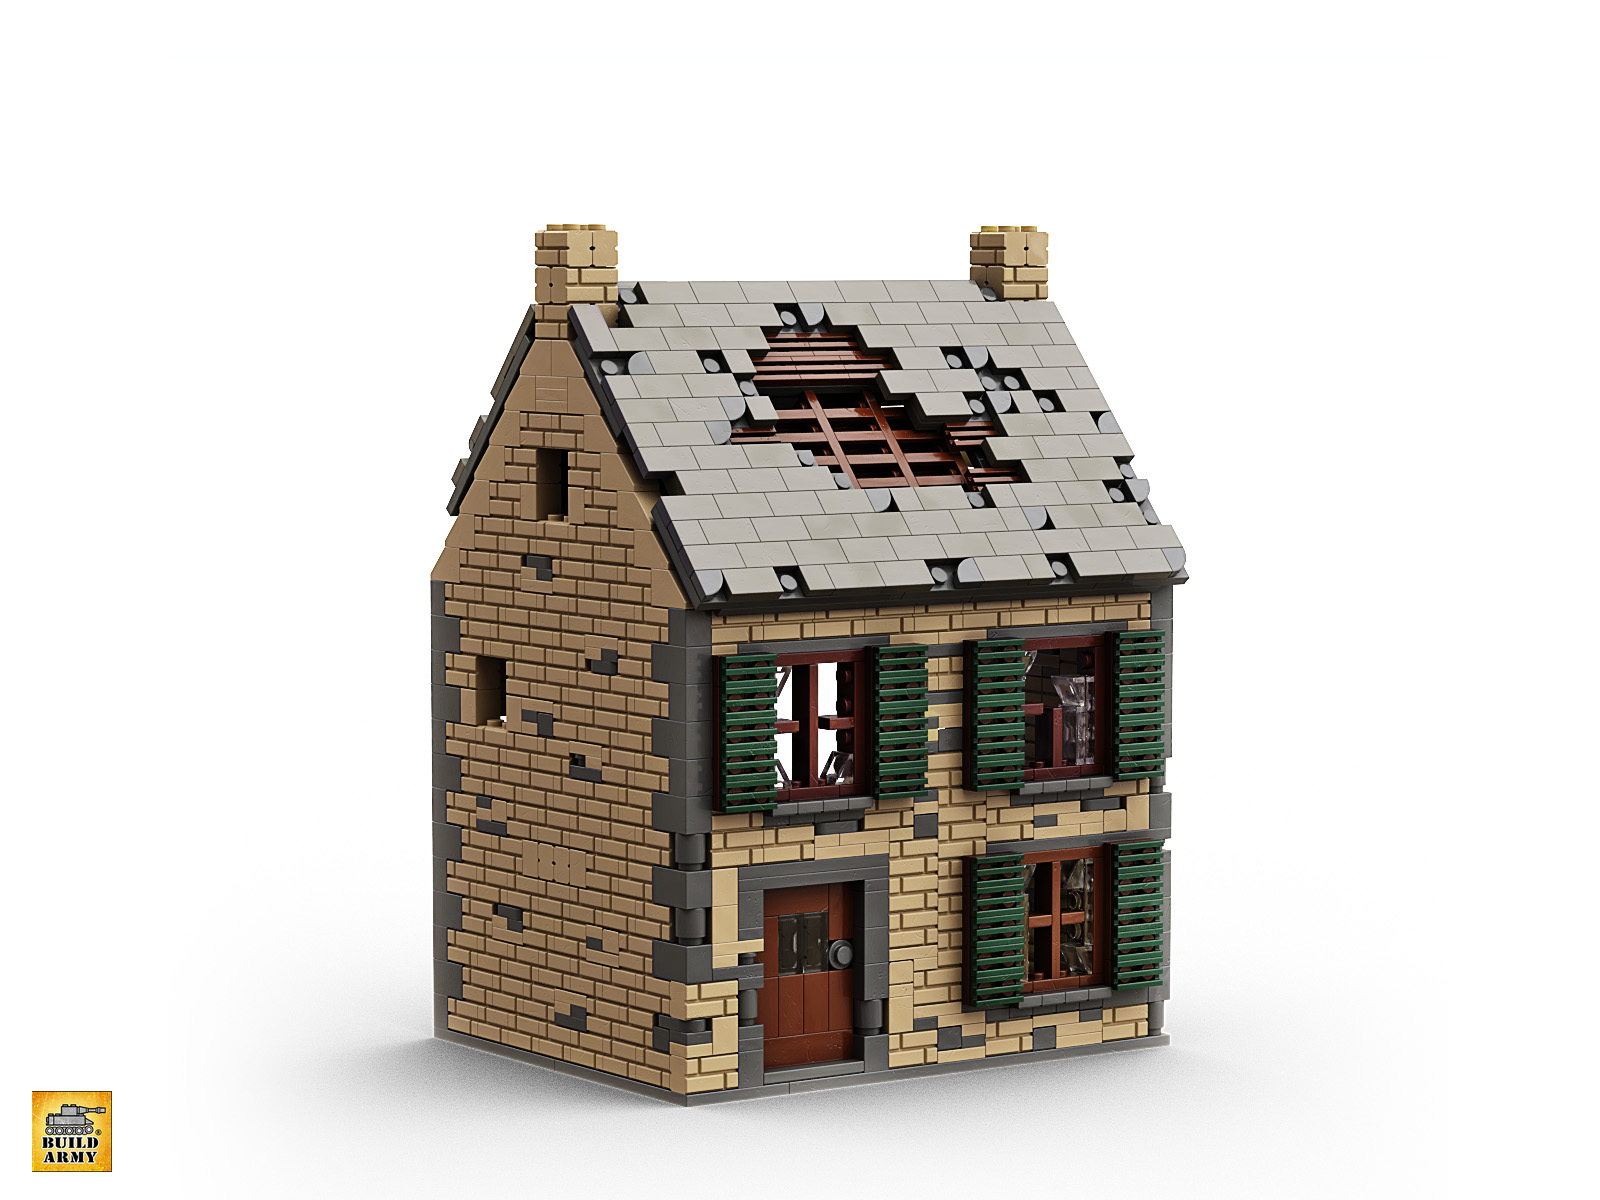  Lego Ww2 Broken House